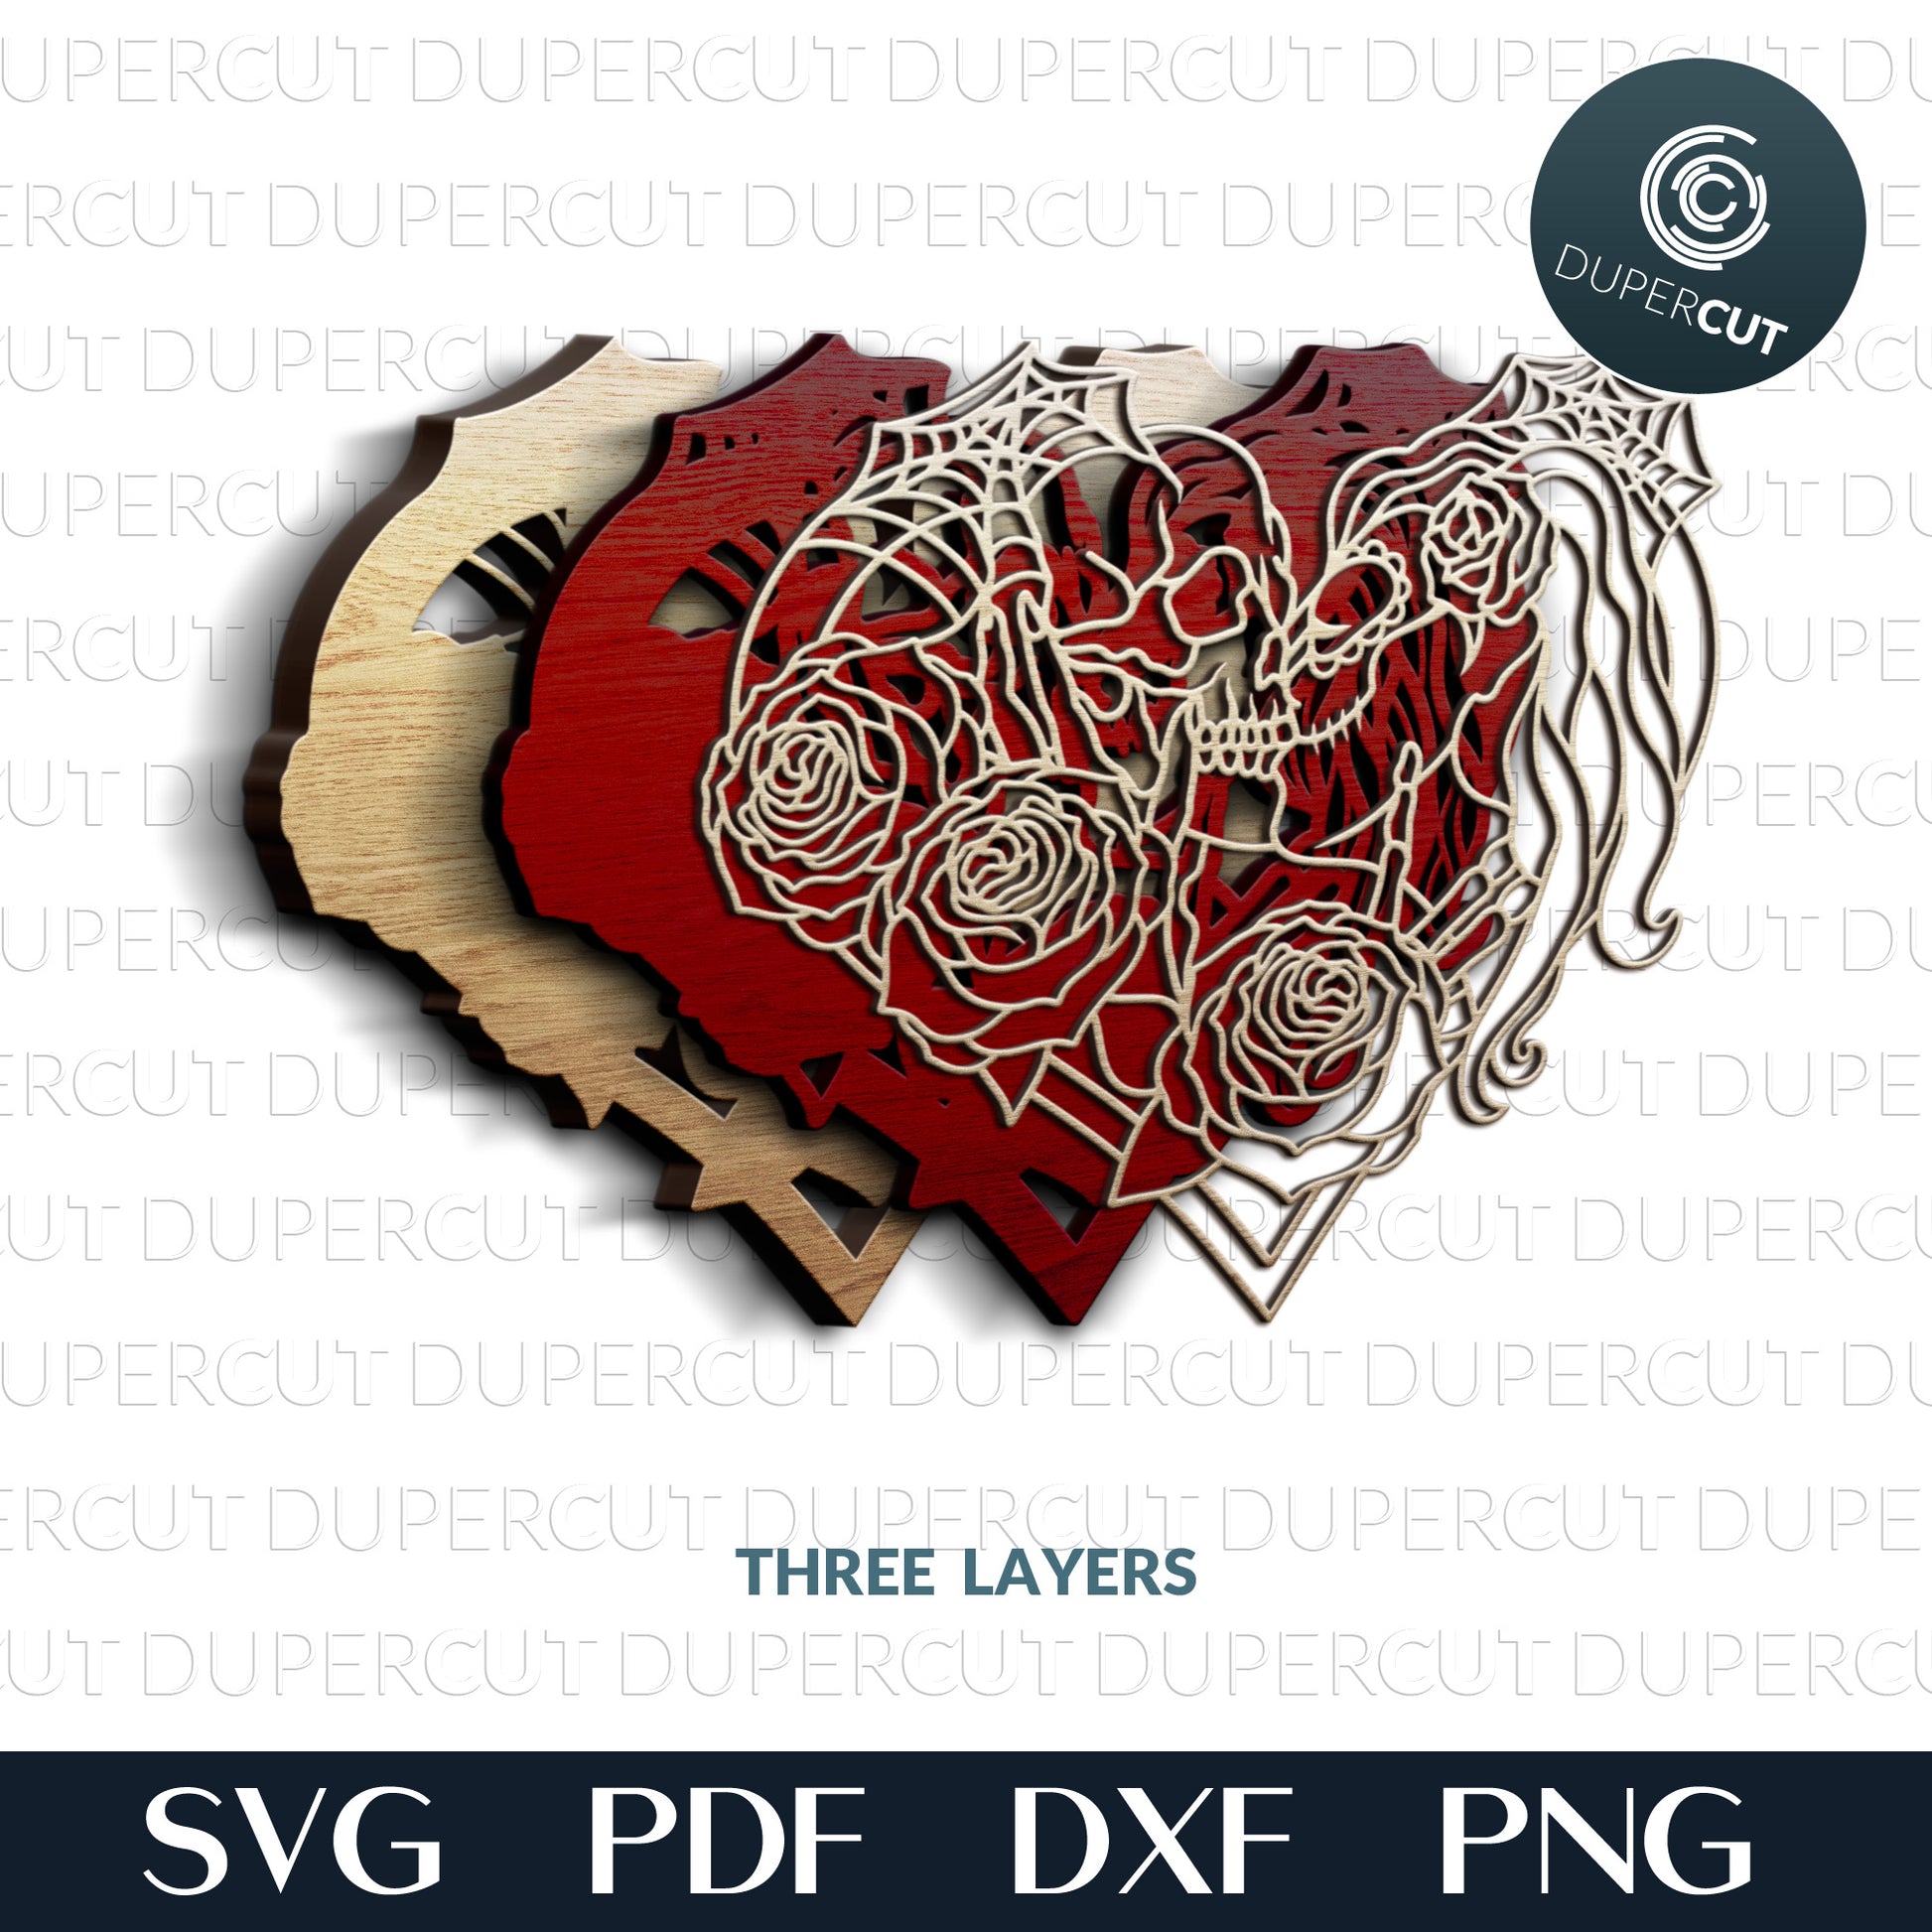 Kissing skulls - steampunk design - SVG PDF DXF layered cutting files for Glowforge, Cricut, Silhouette cameo, CNC plasma machines